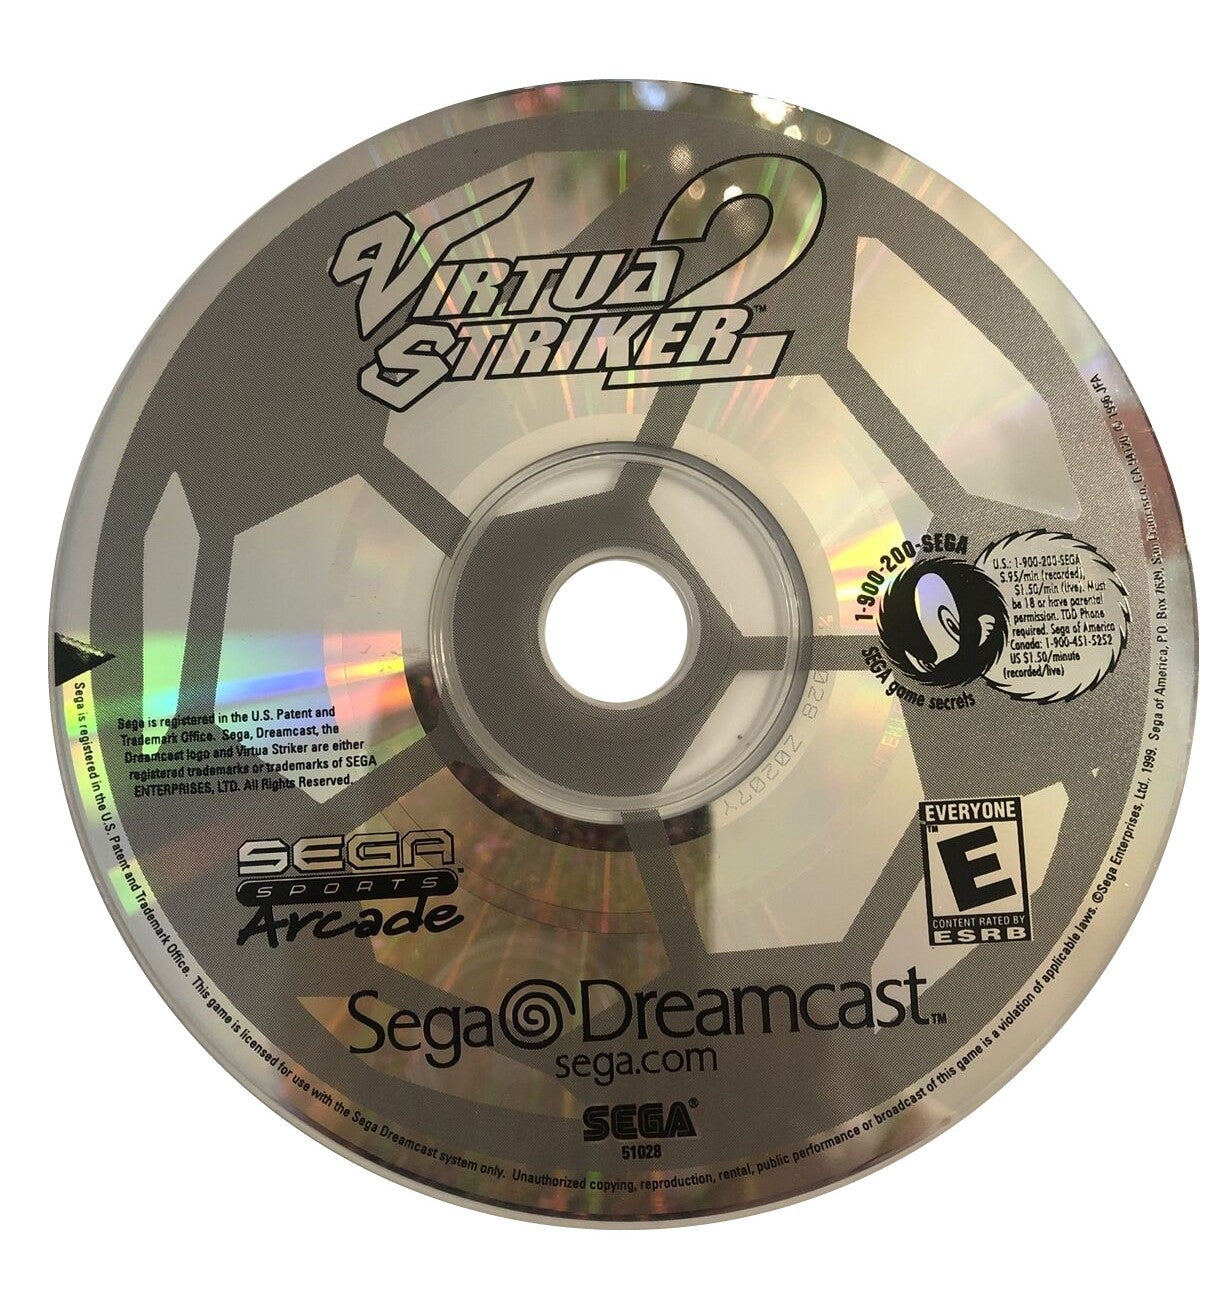 Virtua Striker 2 - Sega Dreamcast Game